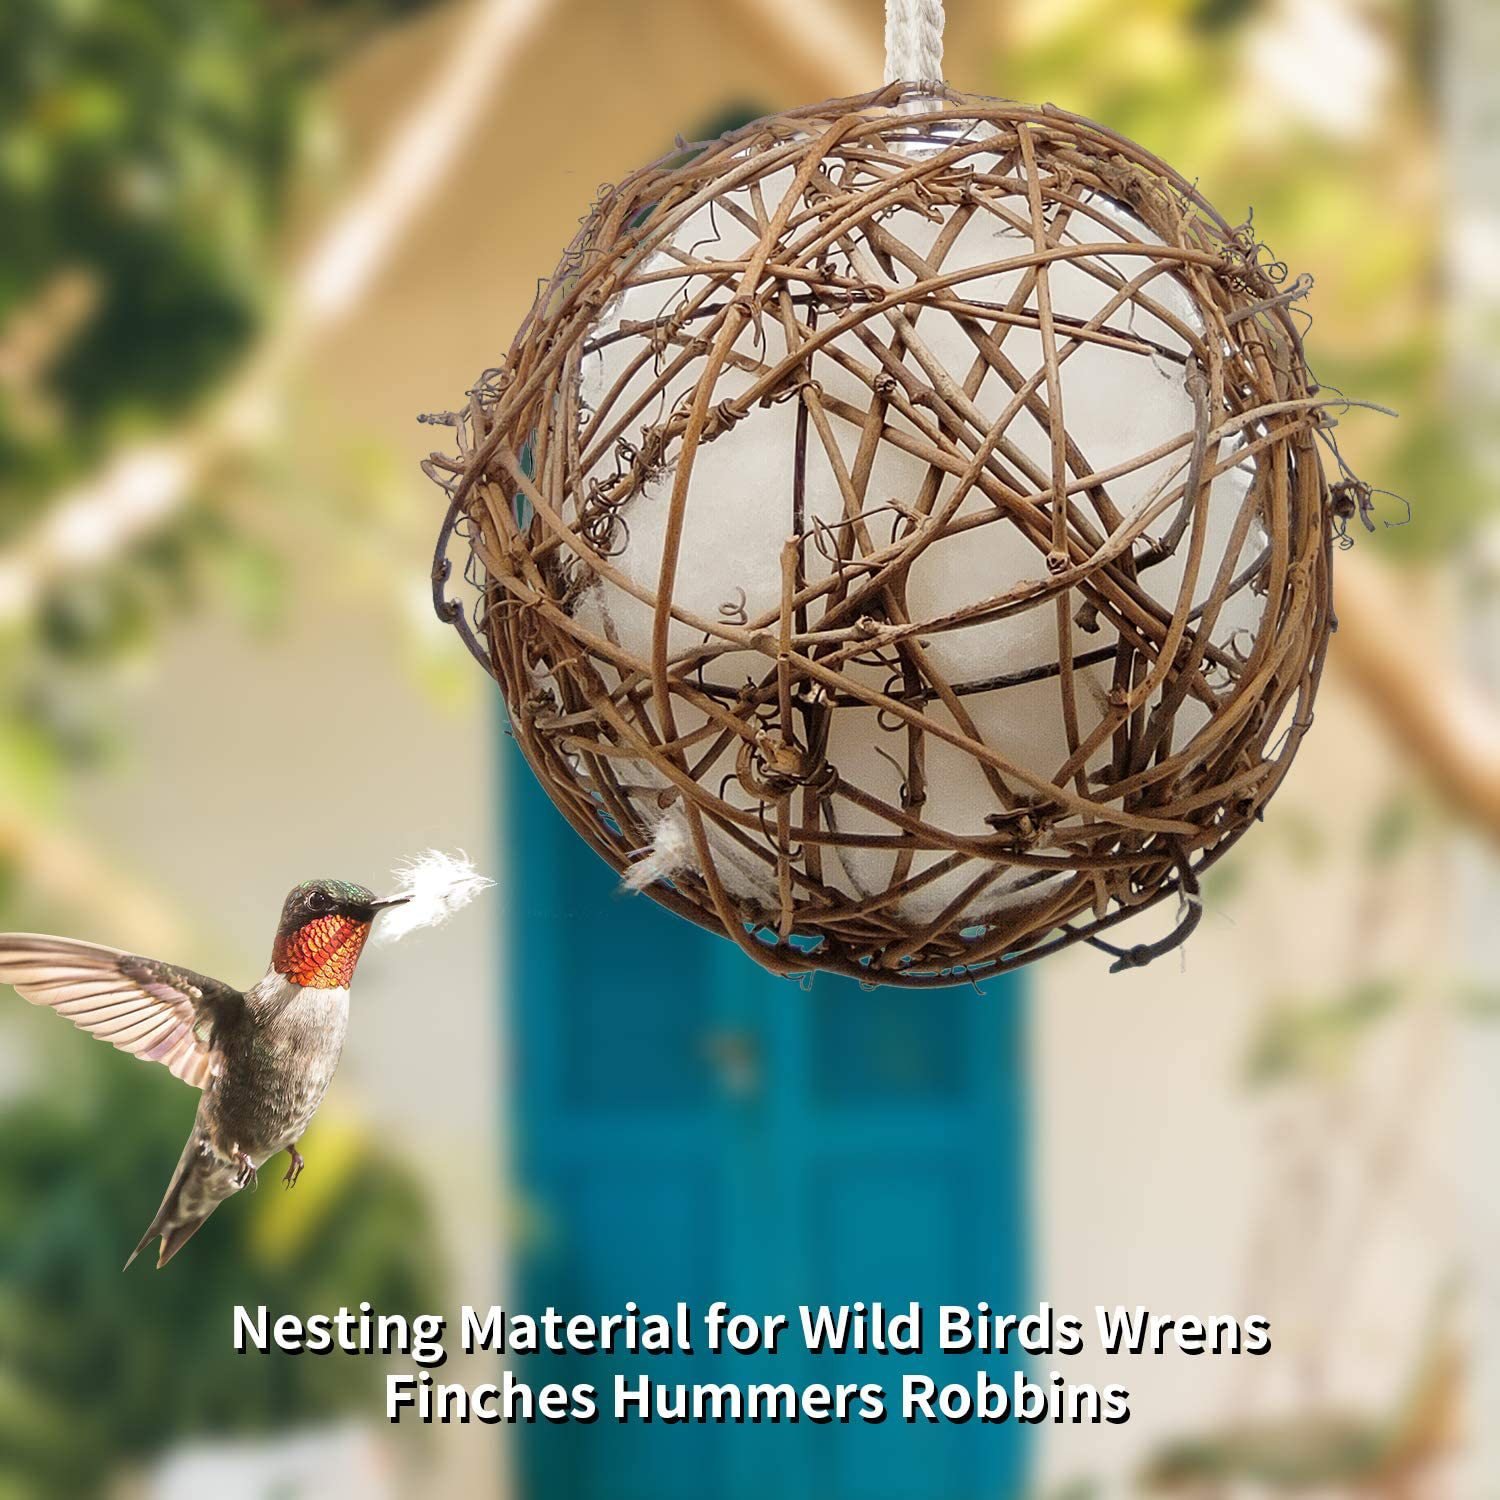 🌱 Hot Spring Sale - Handcrafted Natural Bird Nest